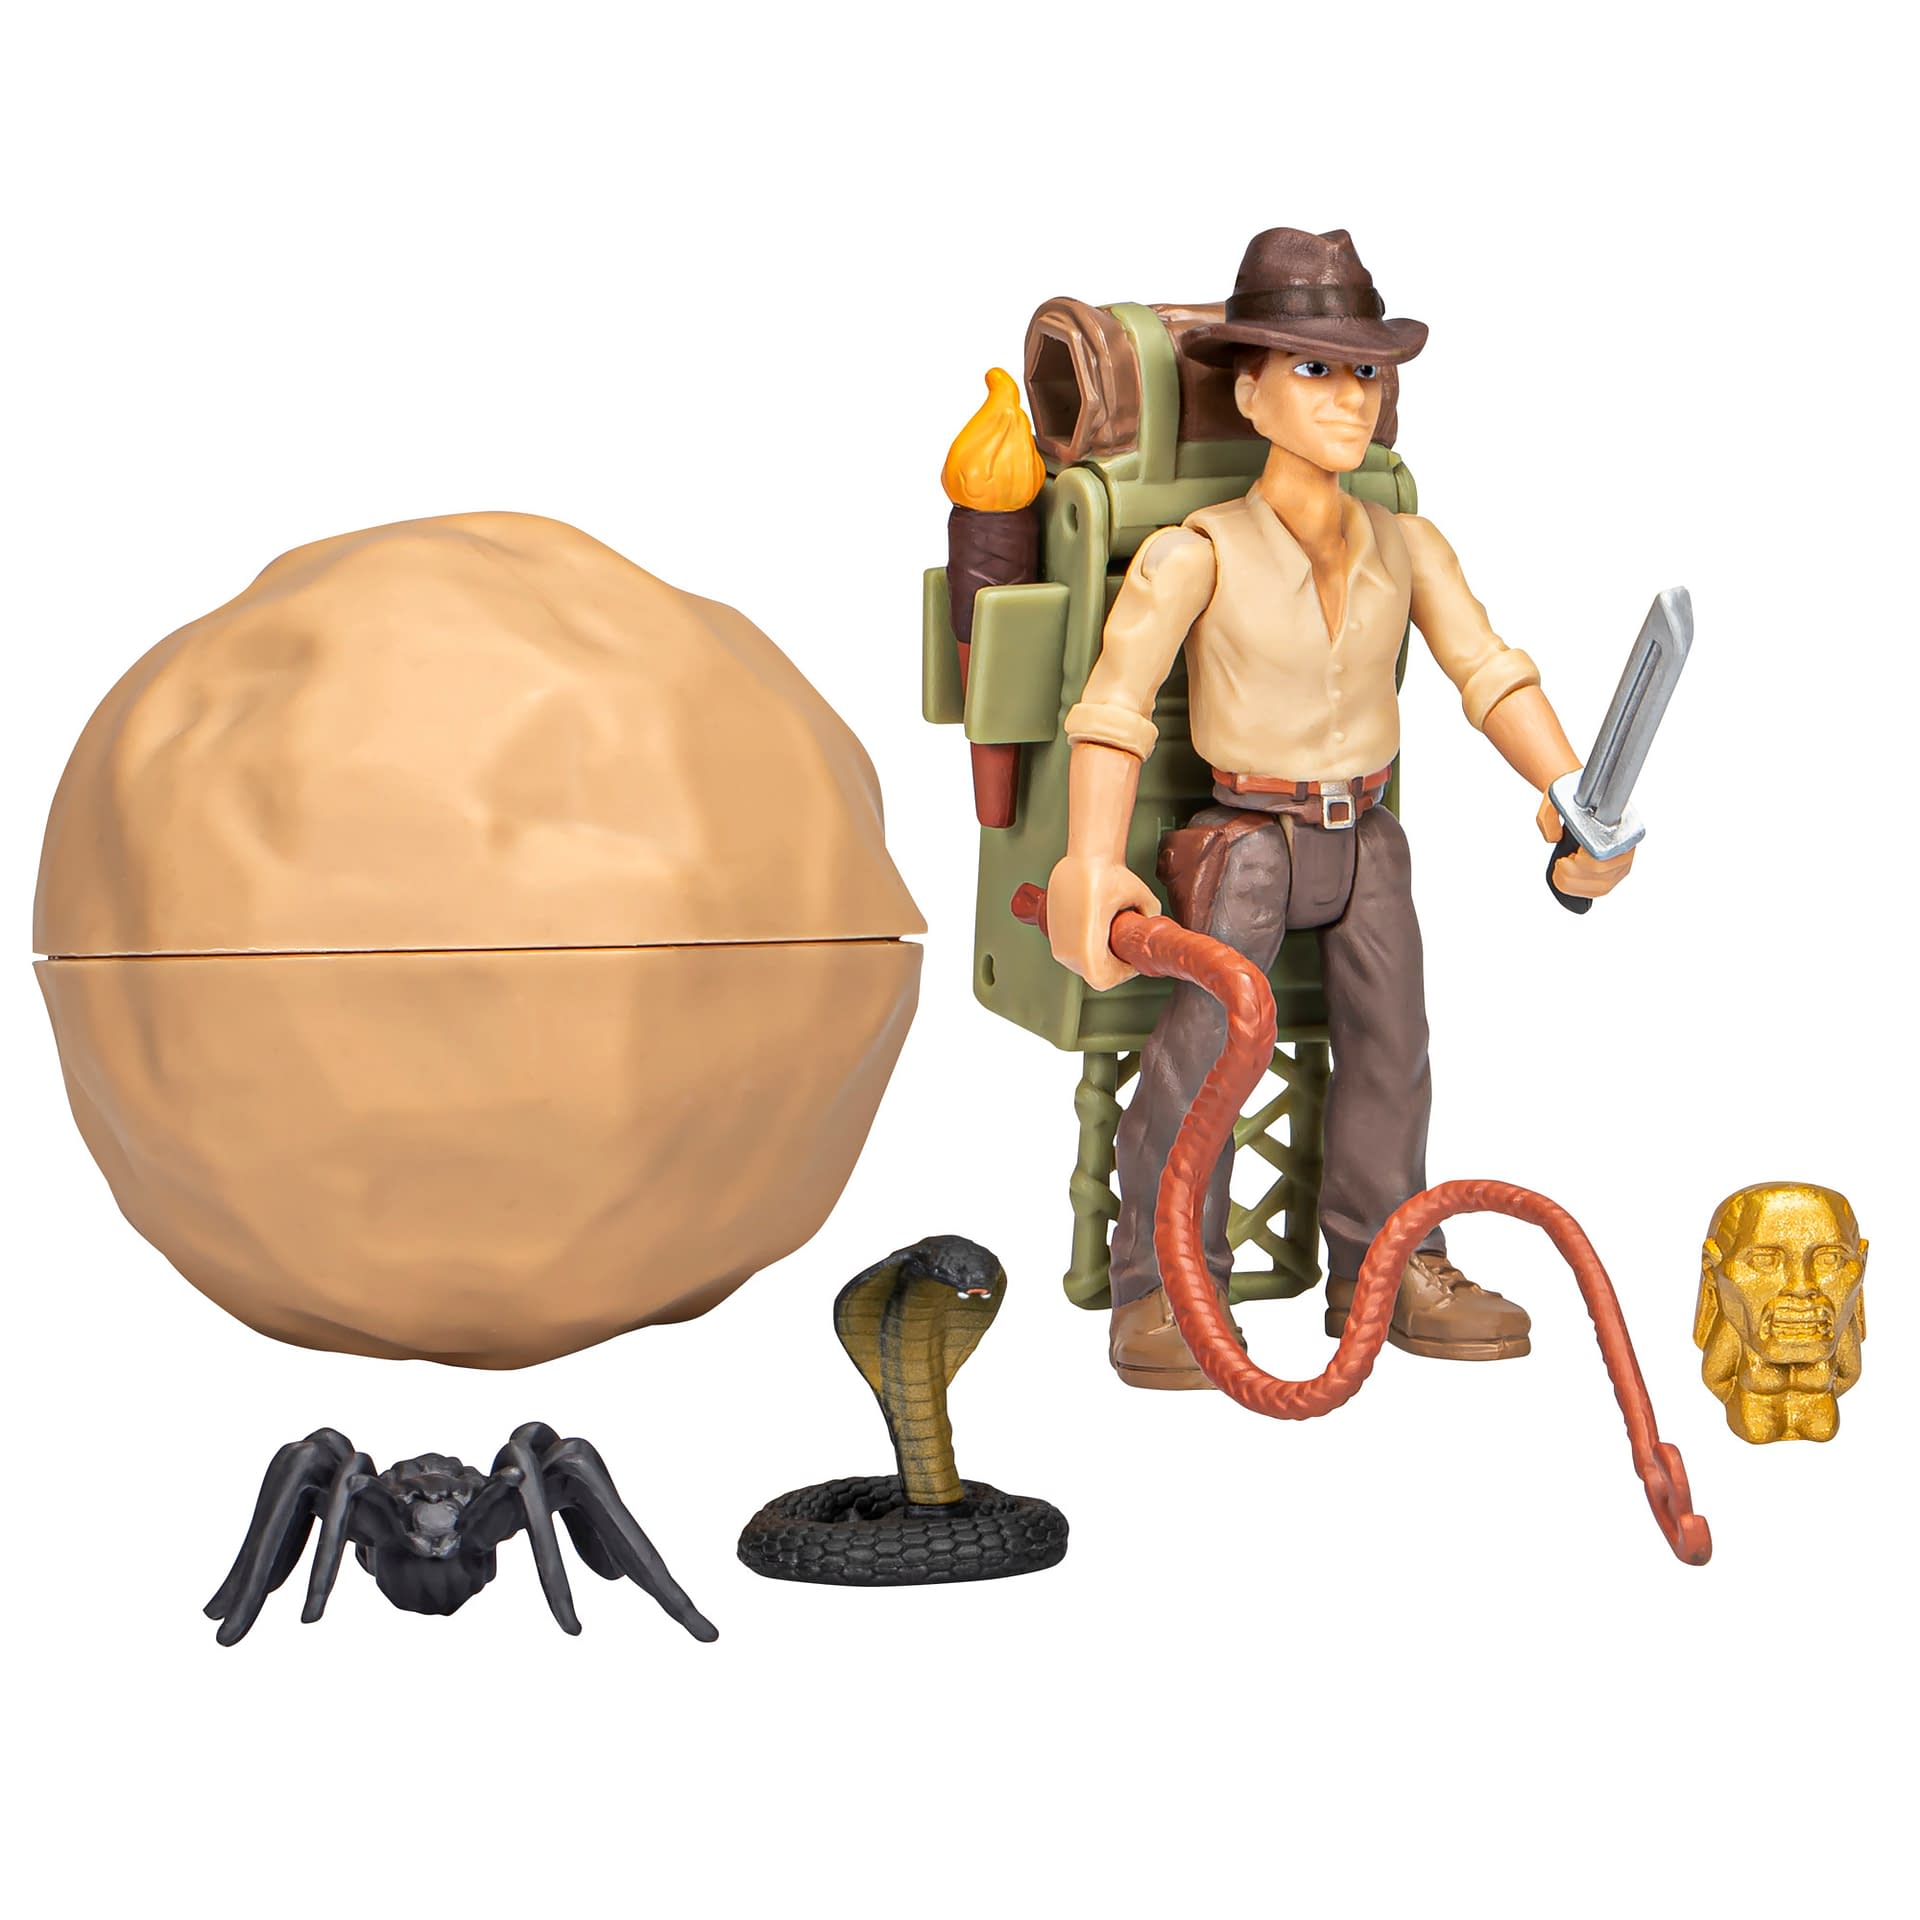 Hasbro Announces Kid-Friendly Indiana Jones Worlds of Adventure Sets